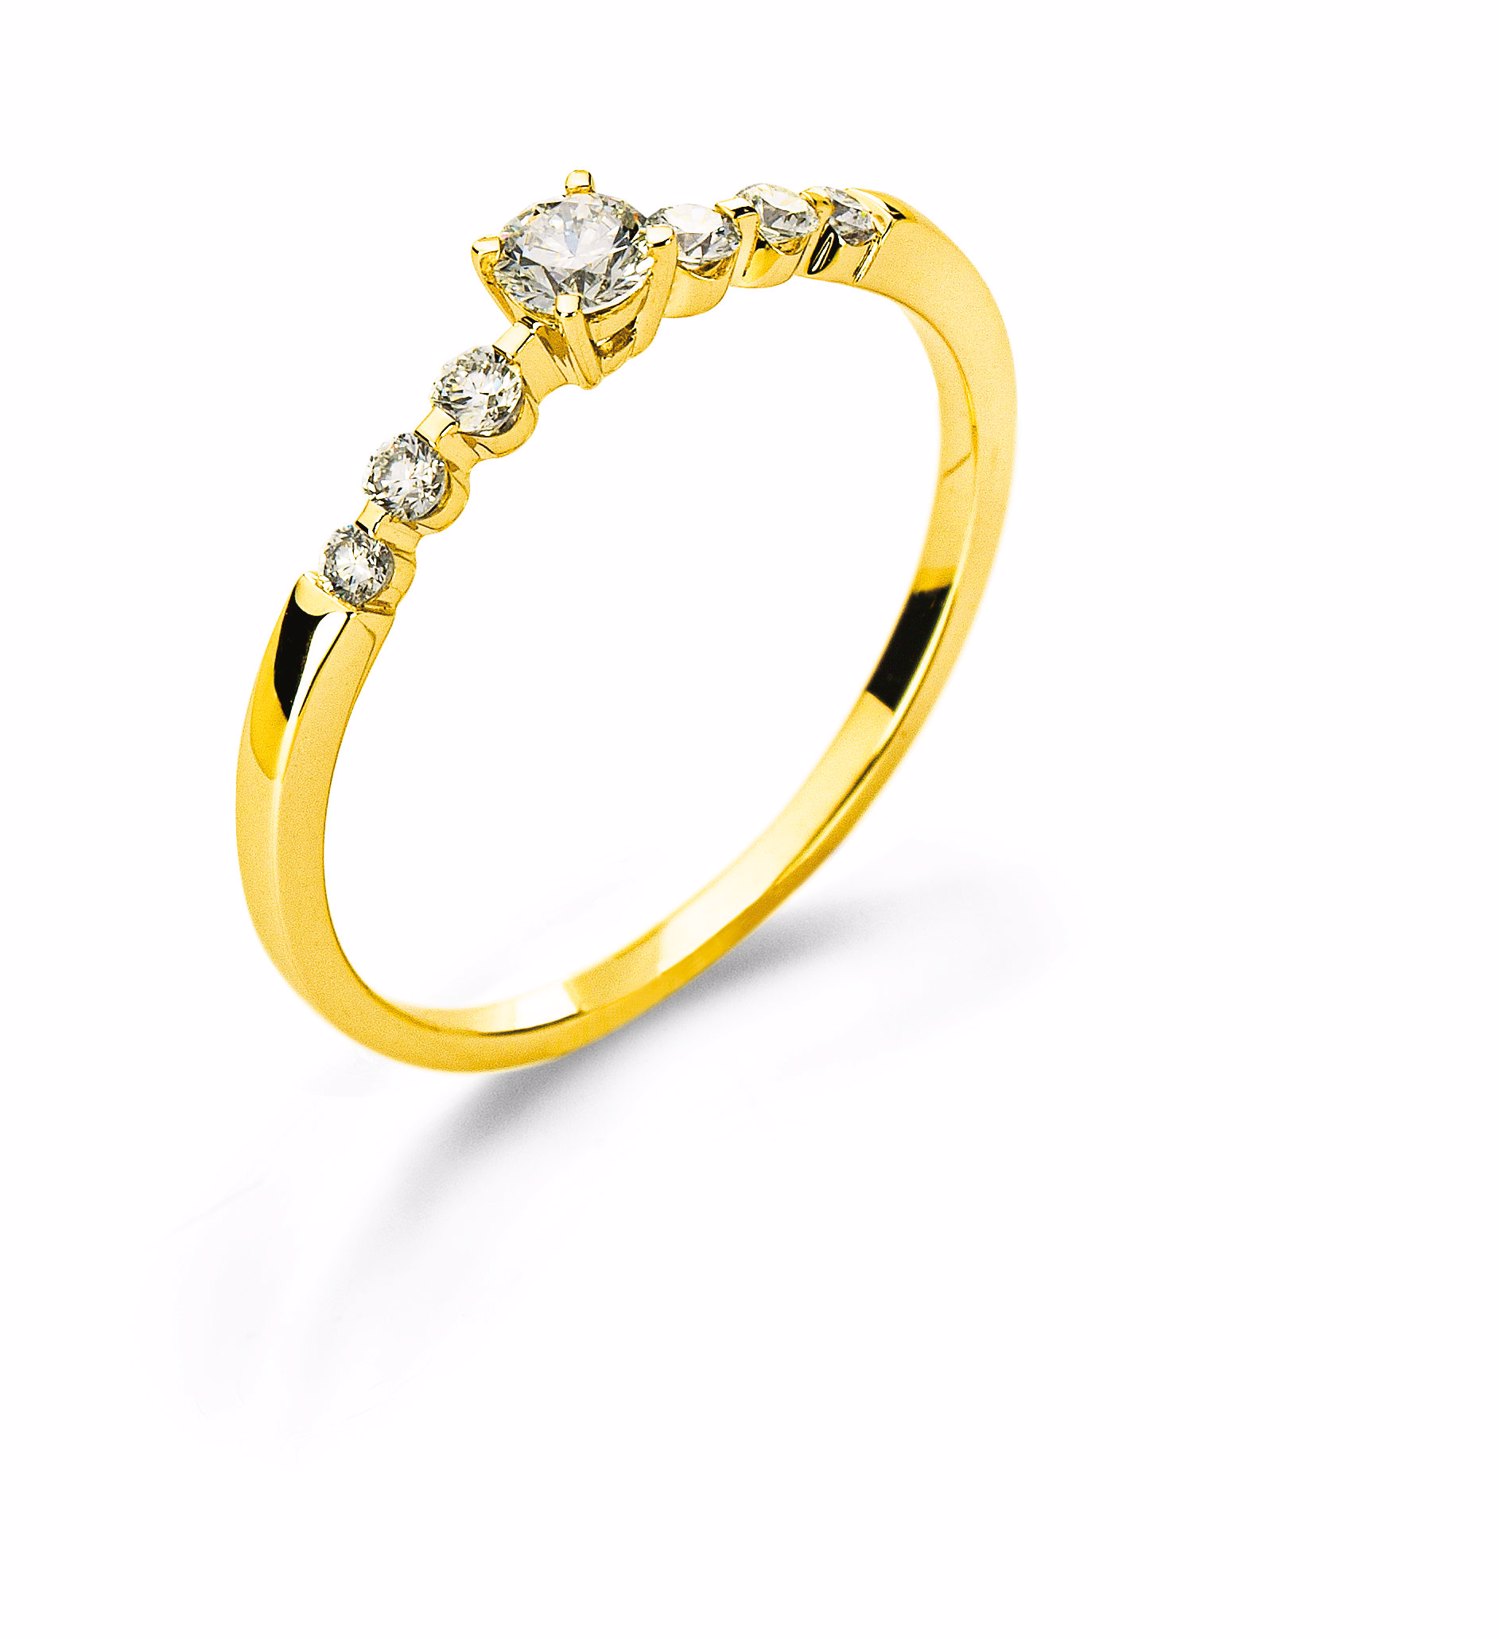 AURONOS Prestige Or jaune 18K diamants 0.25ct